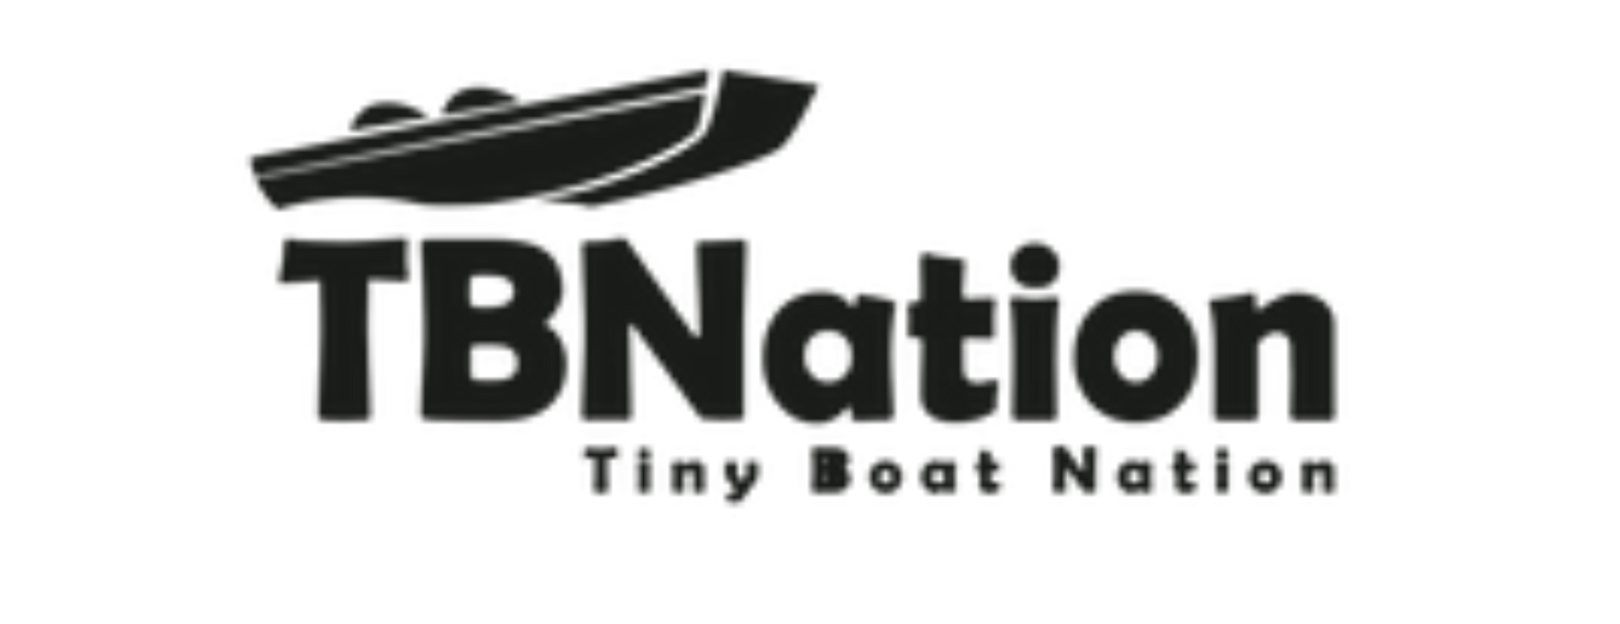 tbnationofficial logo